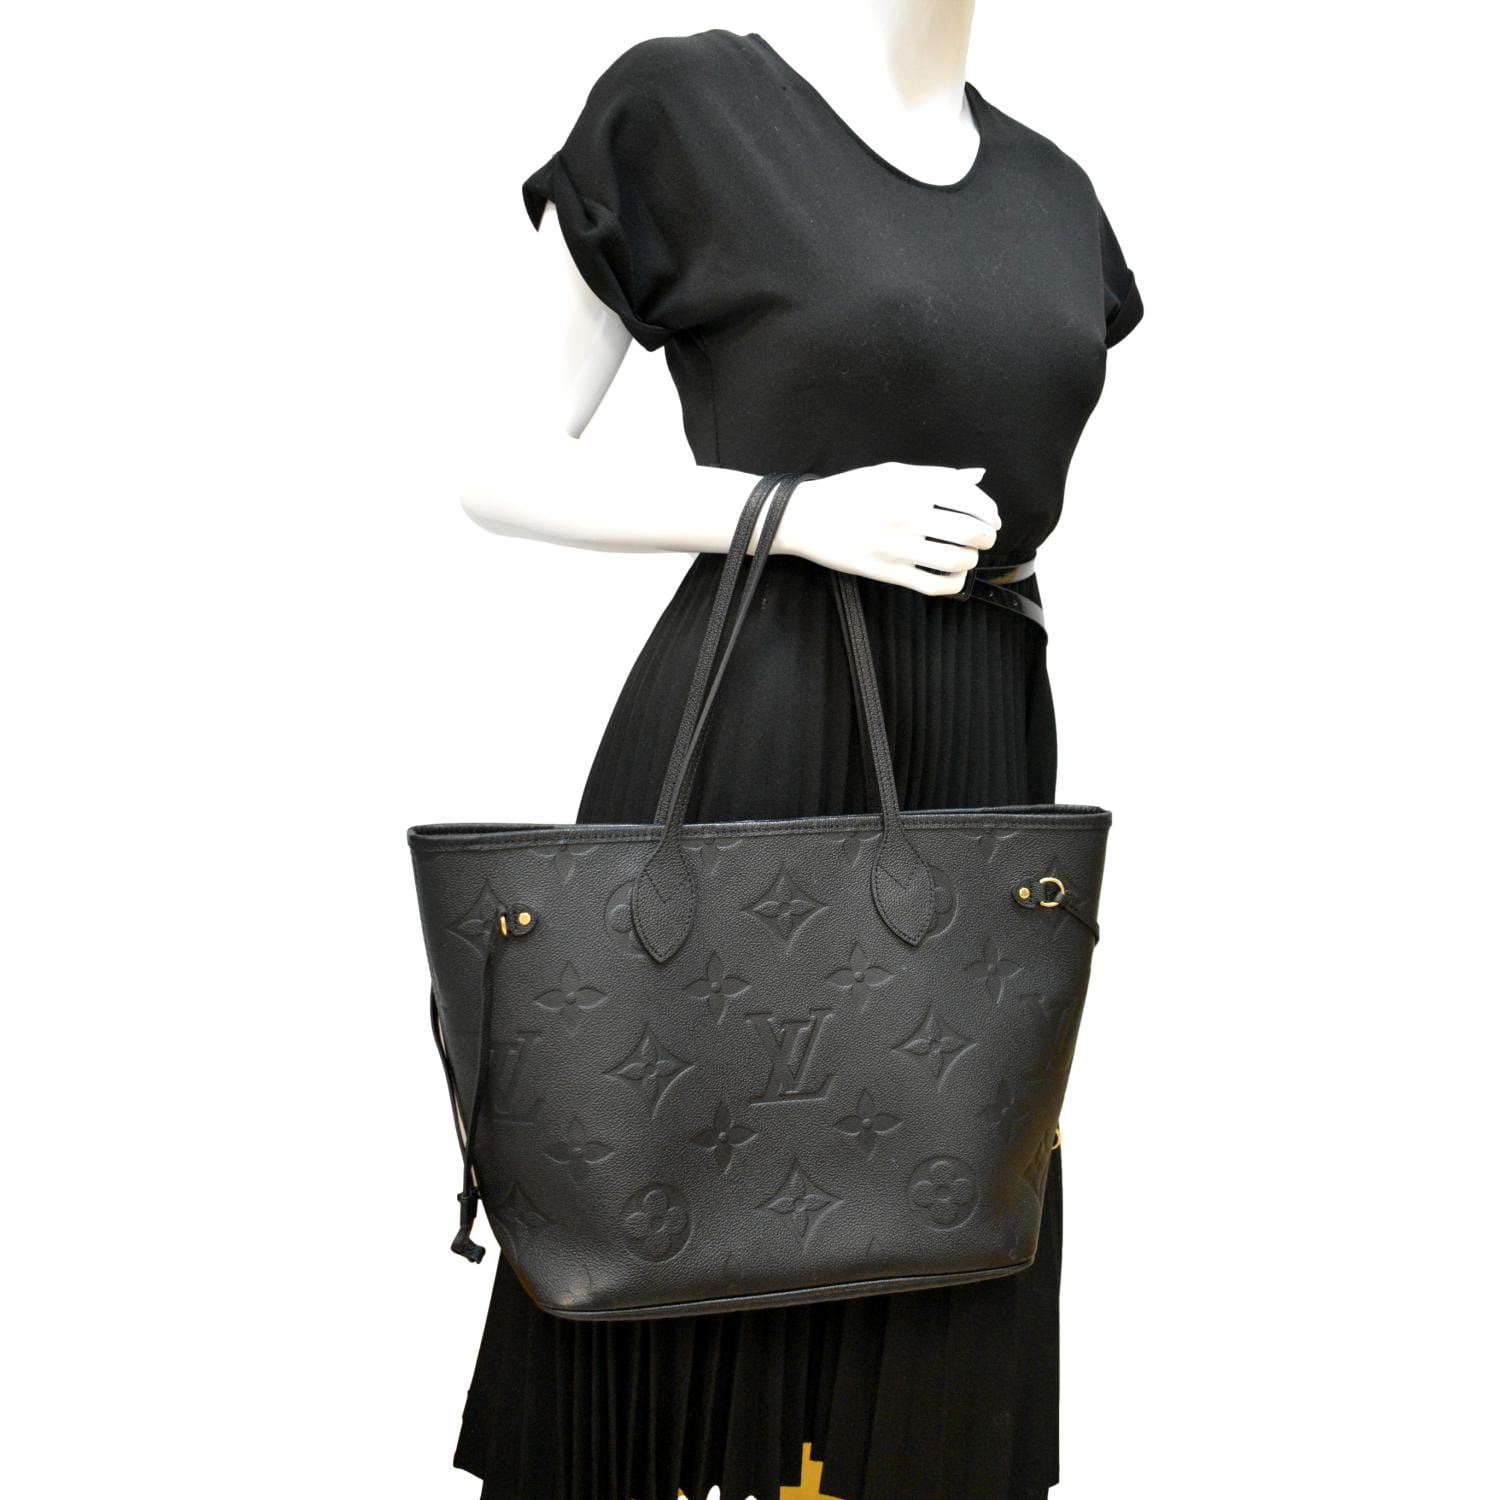 CarryAll MM Monogram Empreinte Leather - Women - Handbags